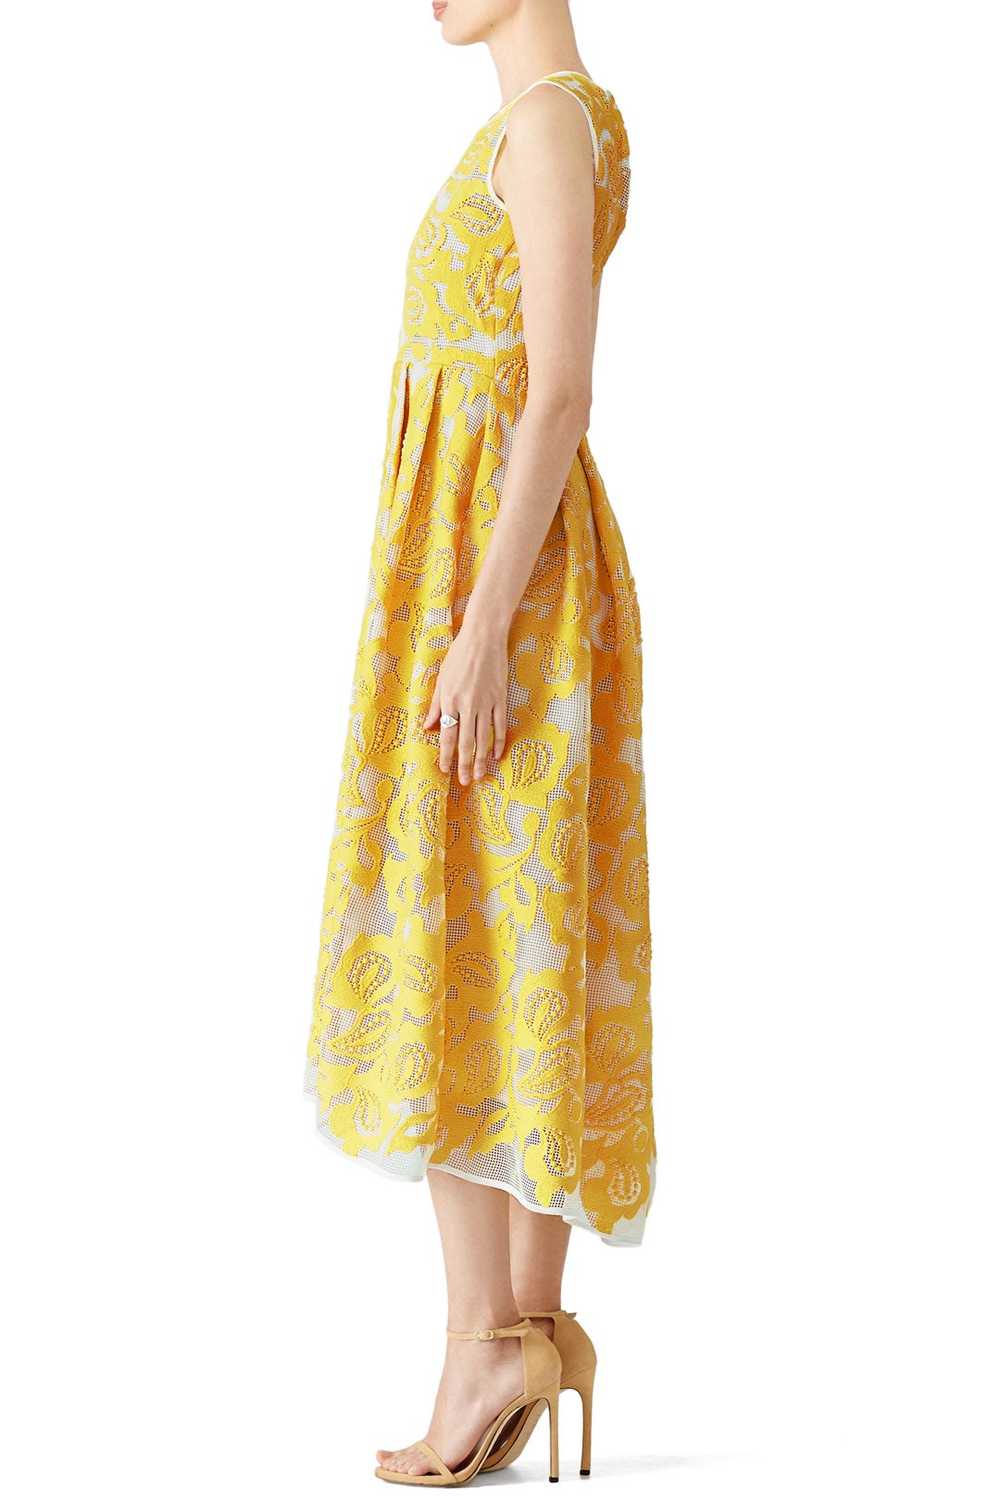 Hunter Bell Yellow Abstract Stitch Dress - image 3